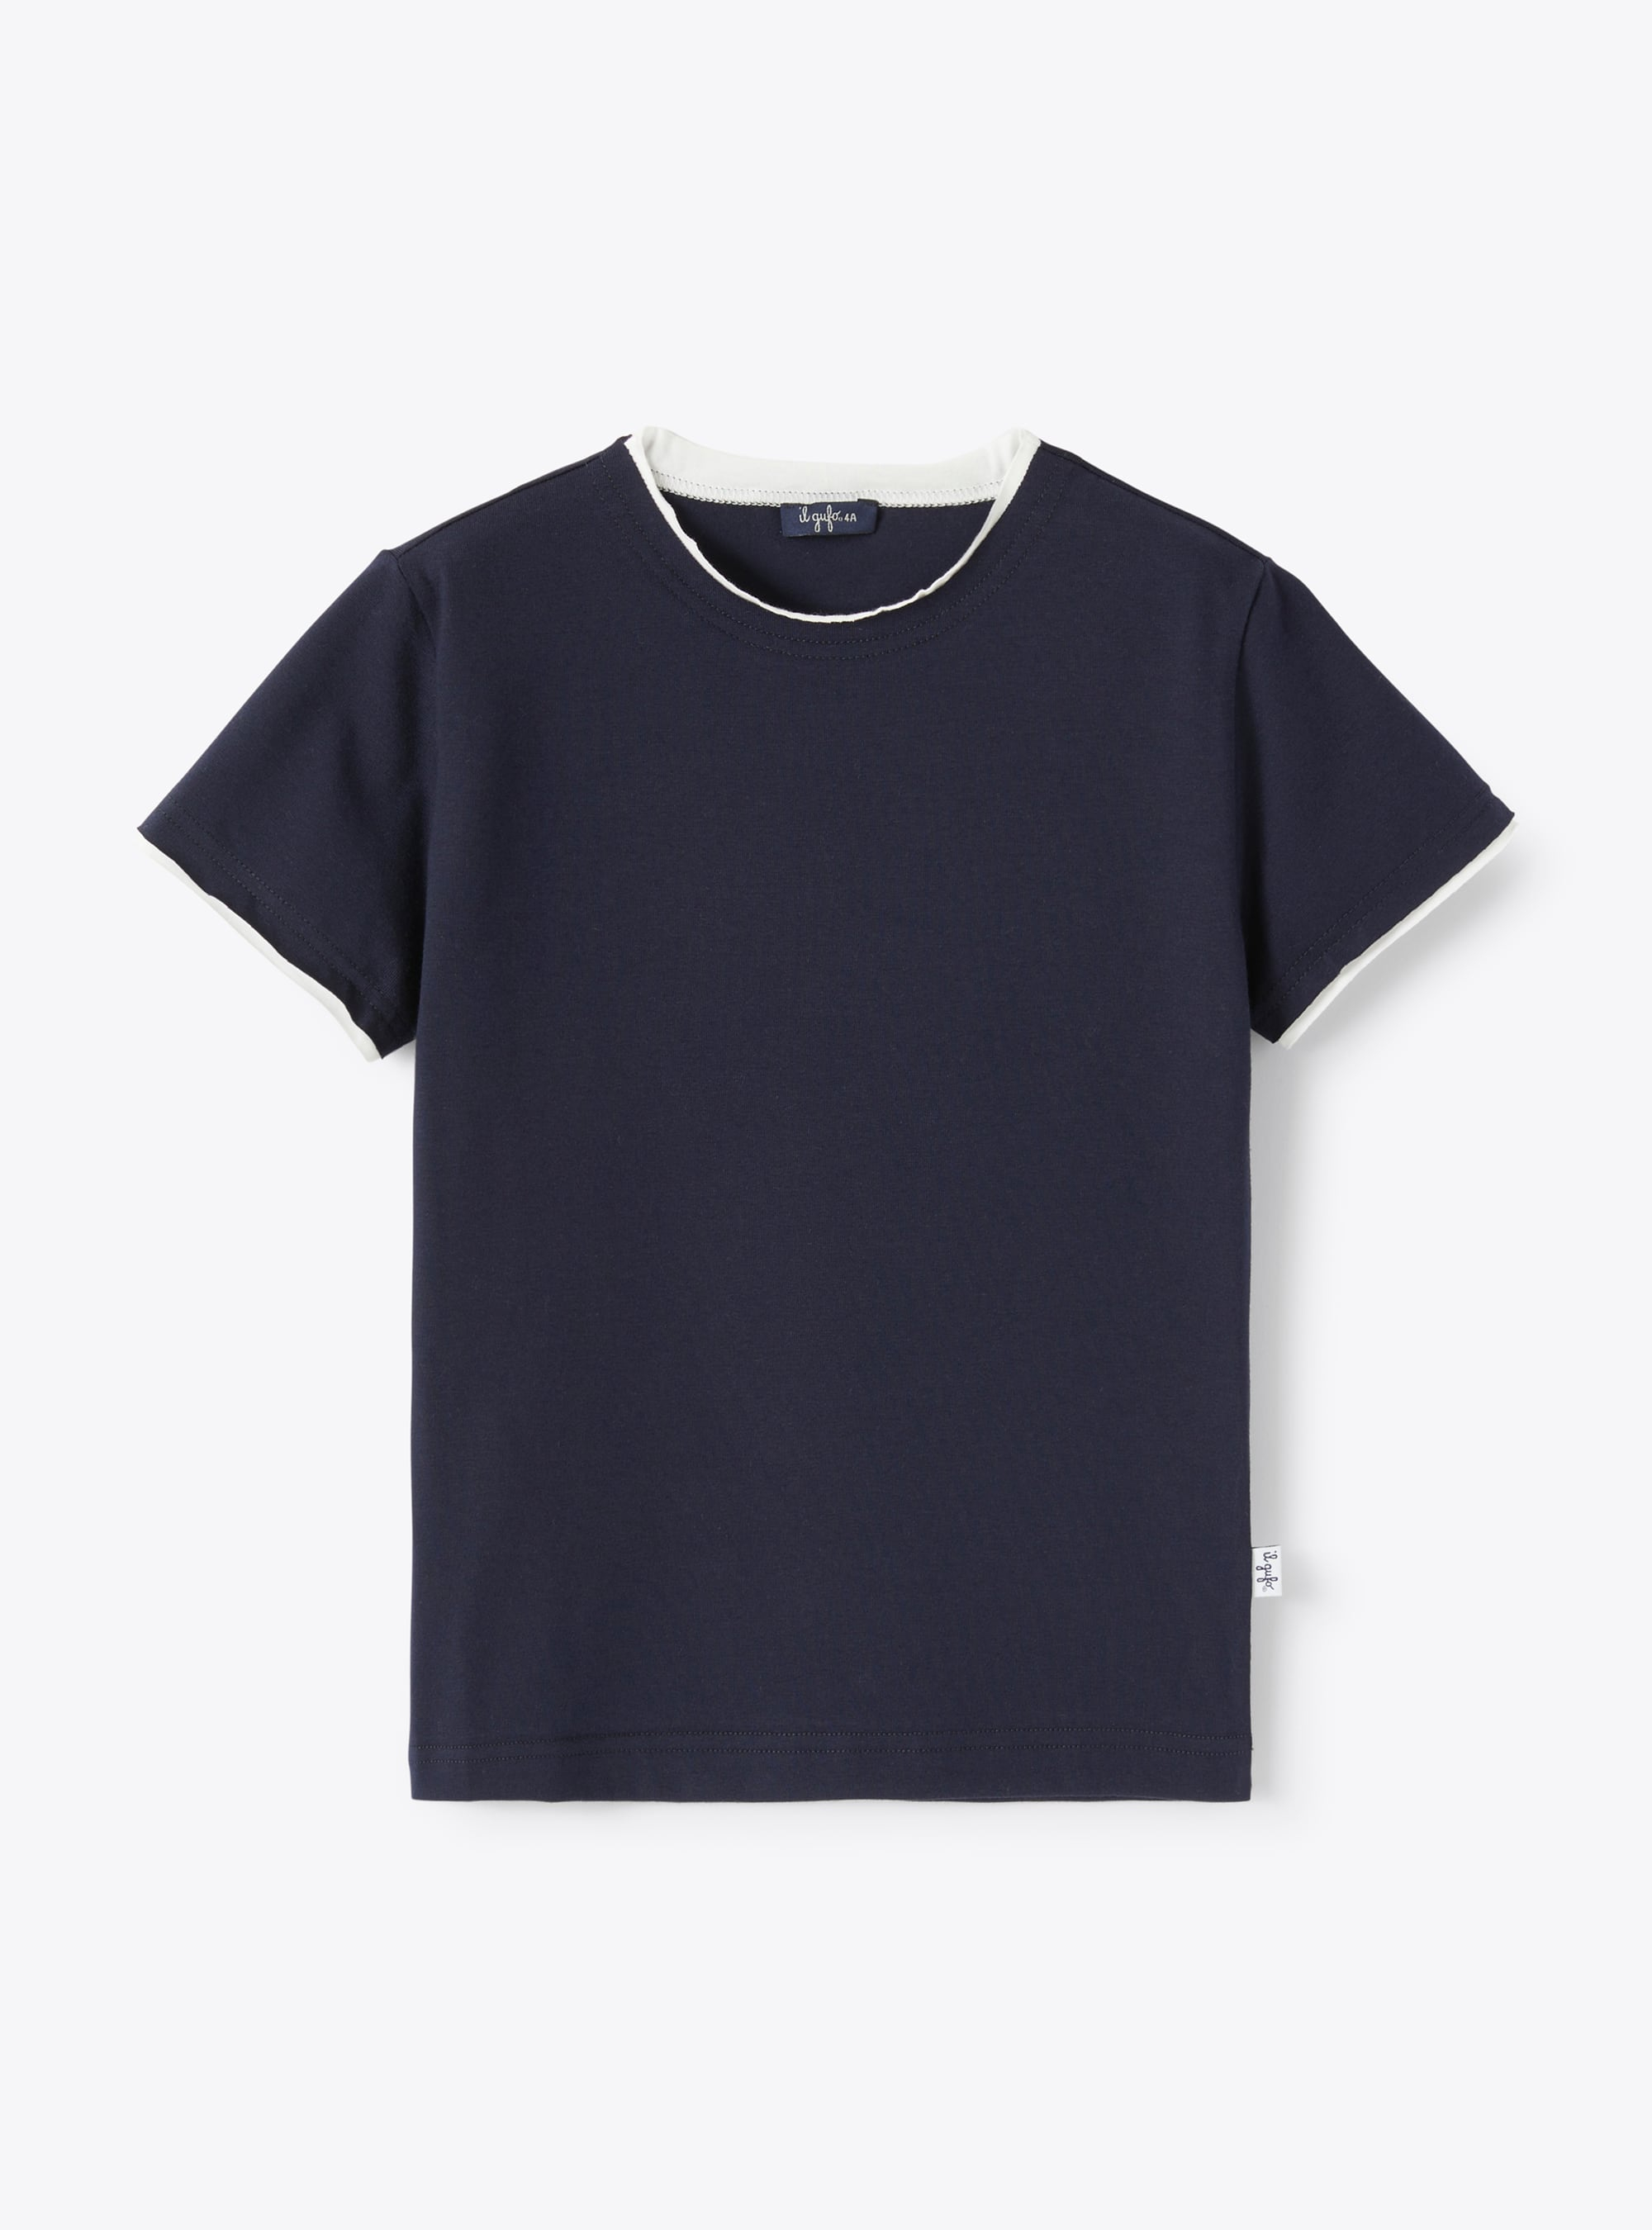 Blue t-shirt with white trim - Blue | Il Gufo